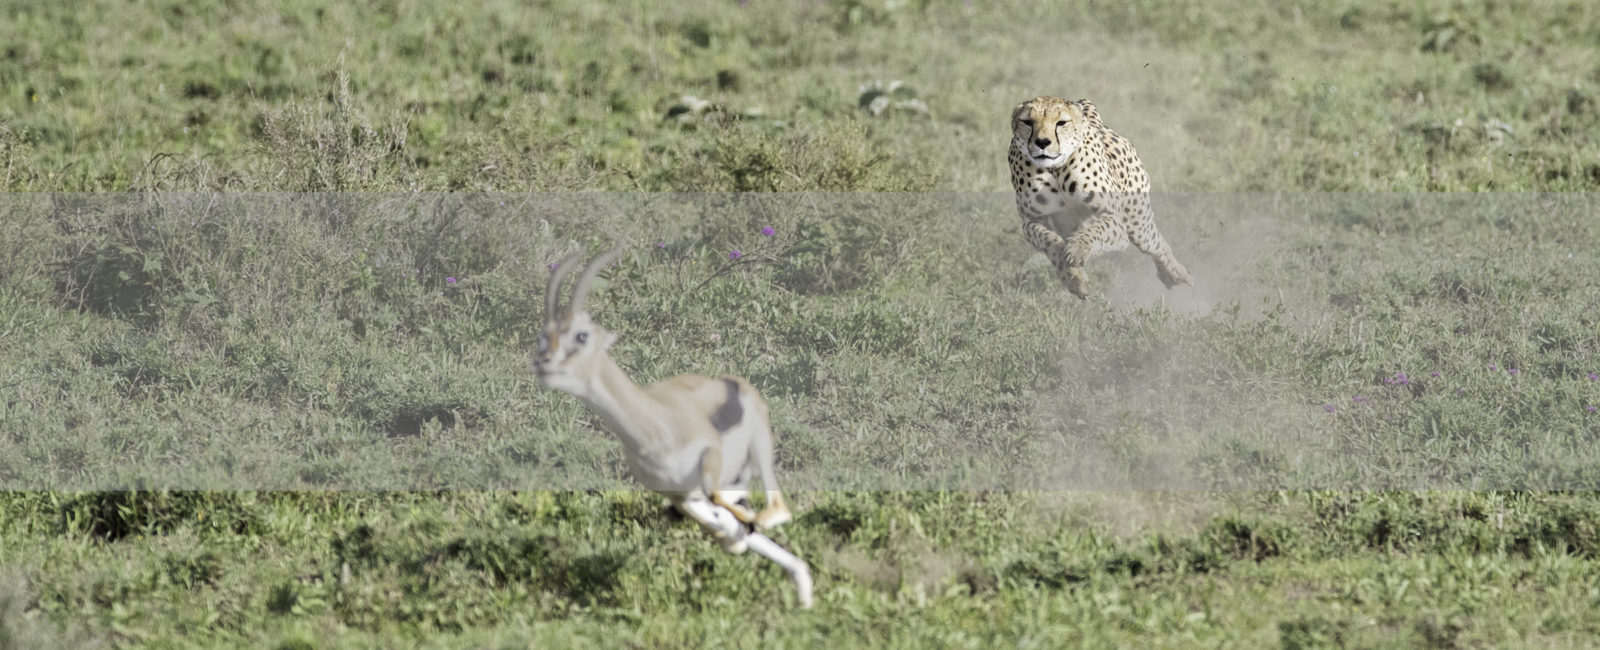 Cheetah Safari Tanzania